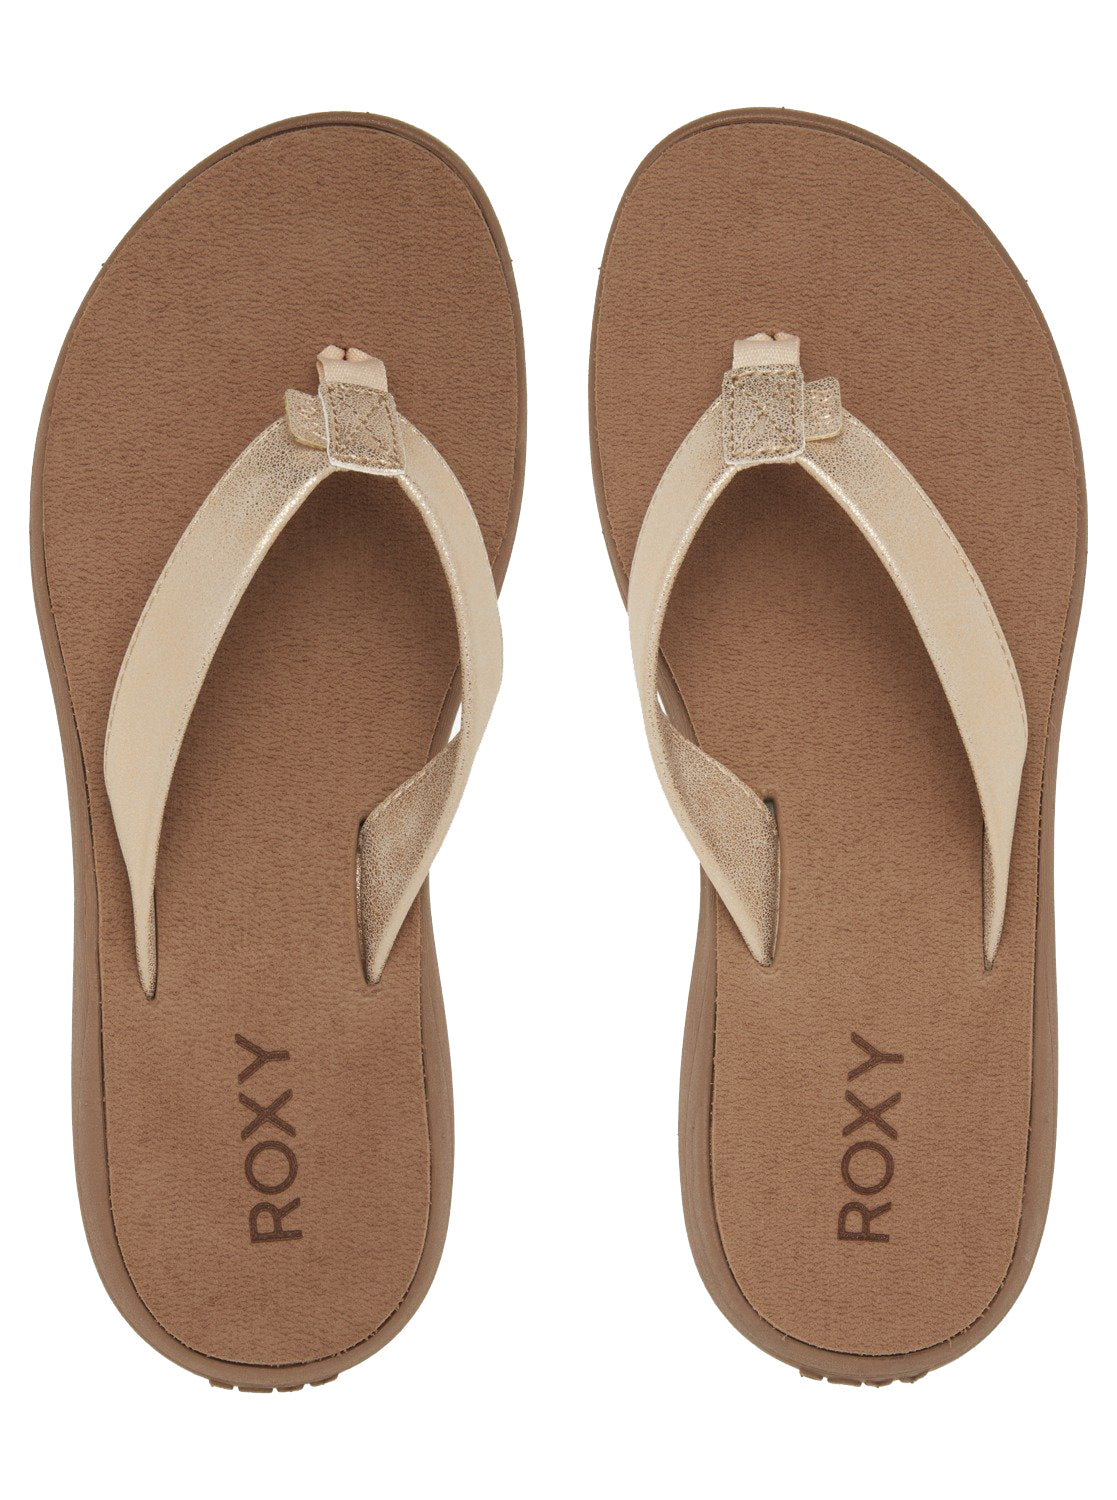 Roxy Lizzie Womens Sandal BRO-Bronze 6